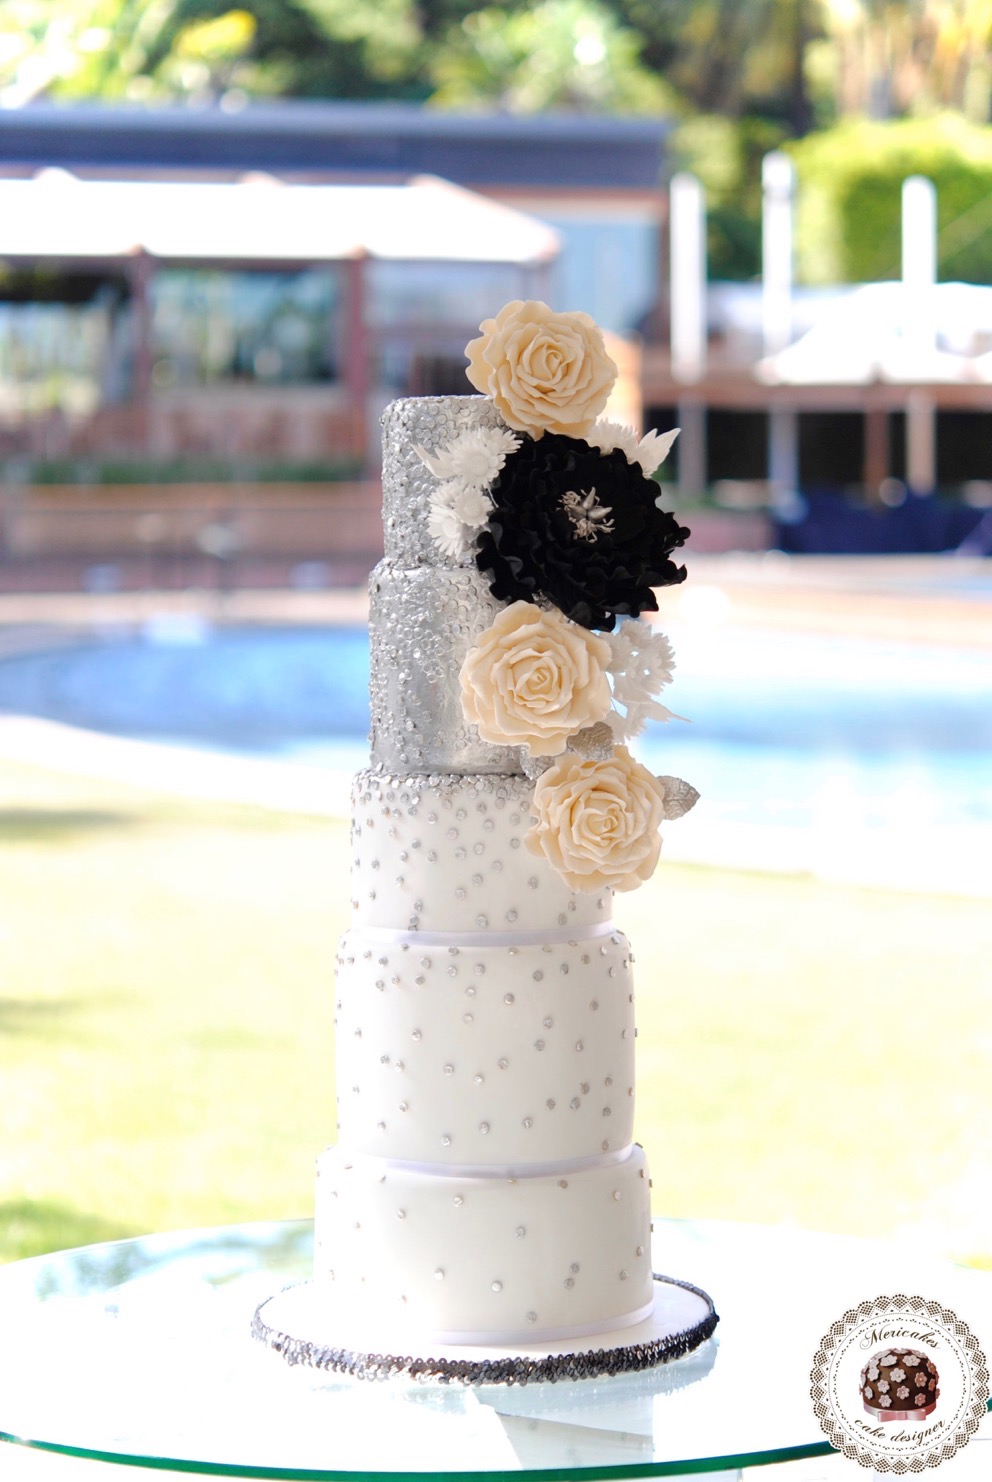 wedding-cake-mericakes-cake-designer-sugarart-fairmont-hotel-fondant-silver-lentejuelas-rose-peony-black-white-barcelona-bridal-cake-chocolate-red-velvet1